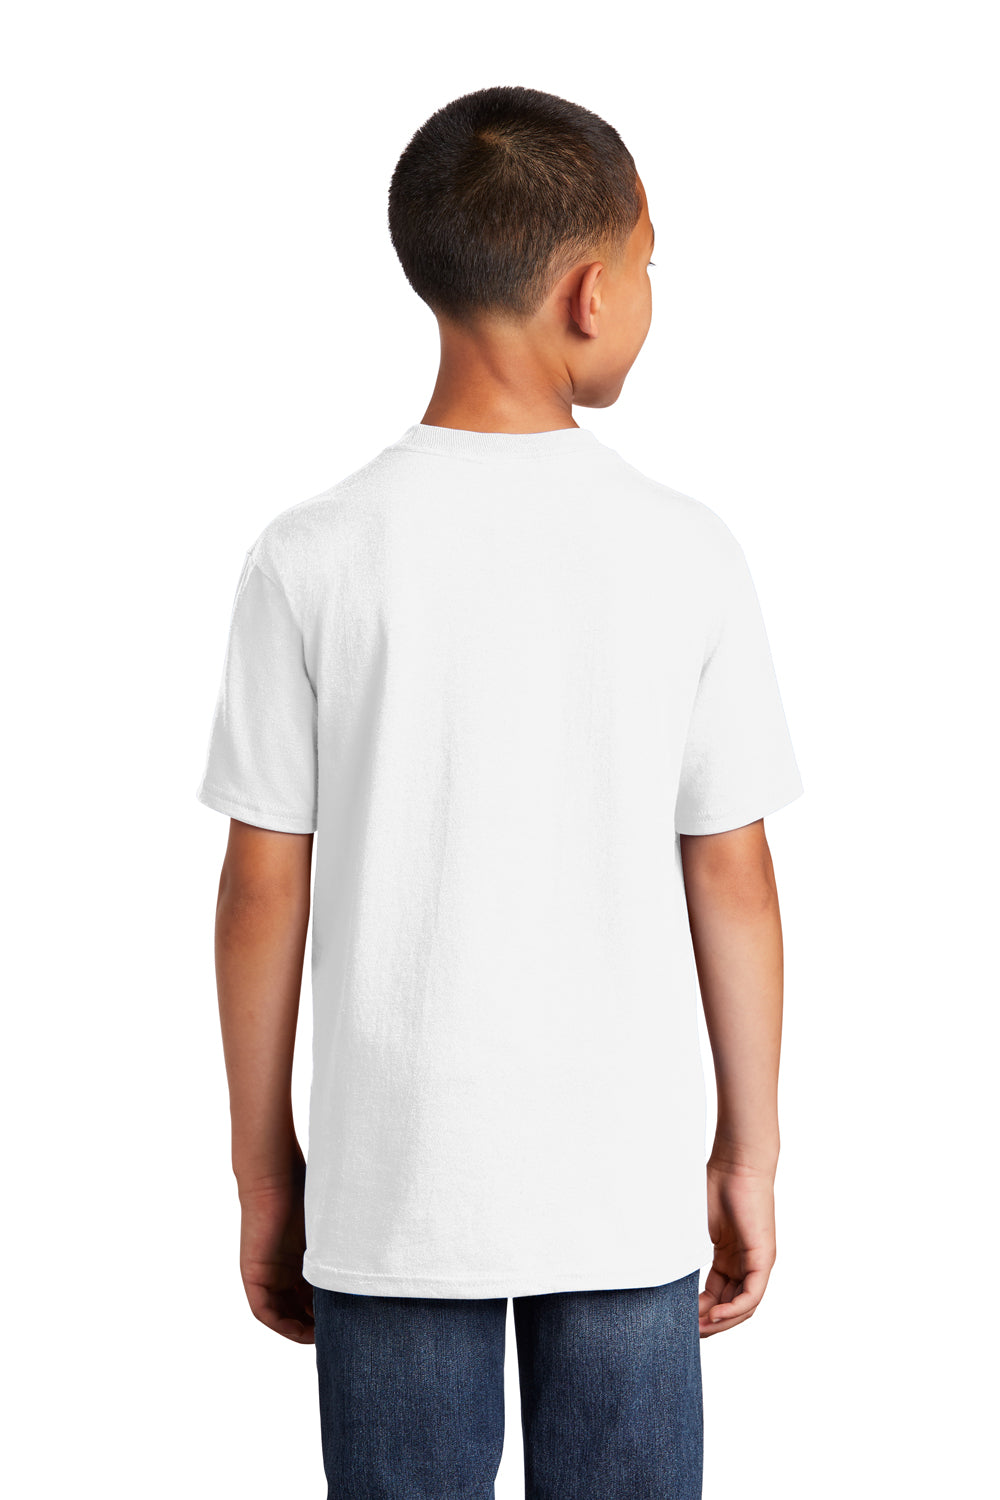 Port & Company PC54Y Youth Core Short Sleeve Crewneck T-Shirt White Back